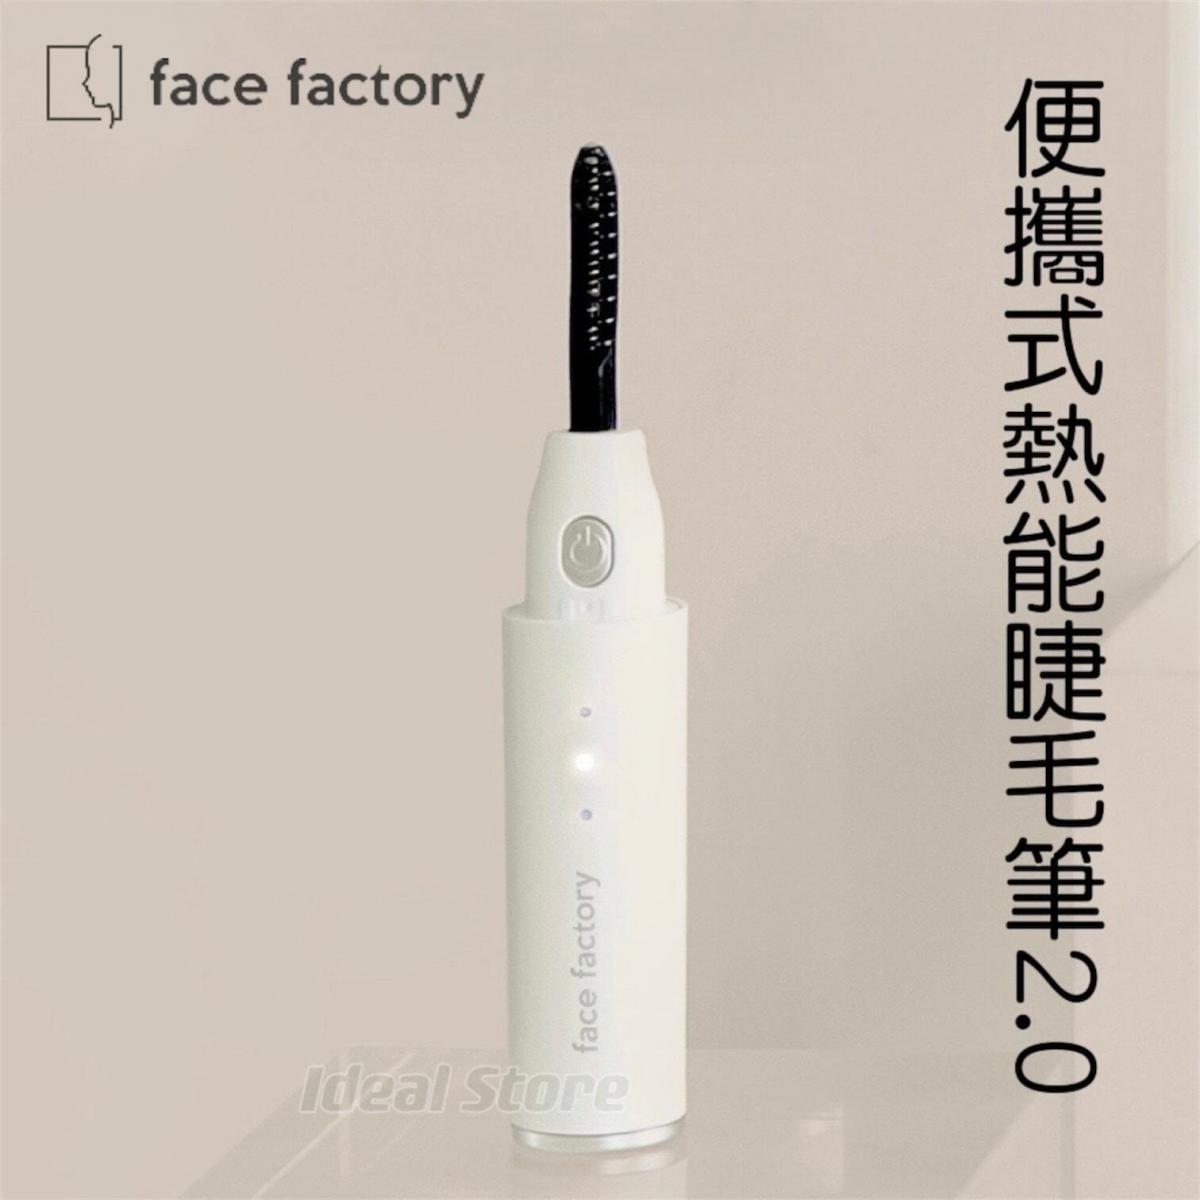 Face Factory - Portable Thermal Eyelash Pencil 2.0｜Second Generation｜Electric Eyelash Machine｜Lash Perm